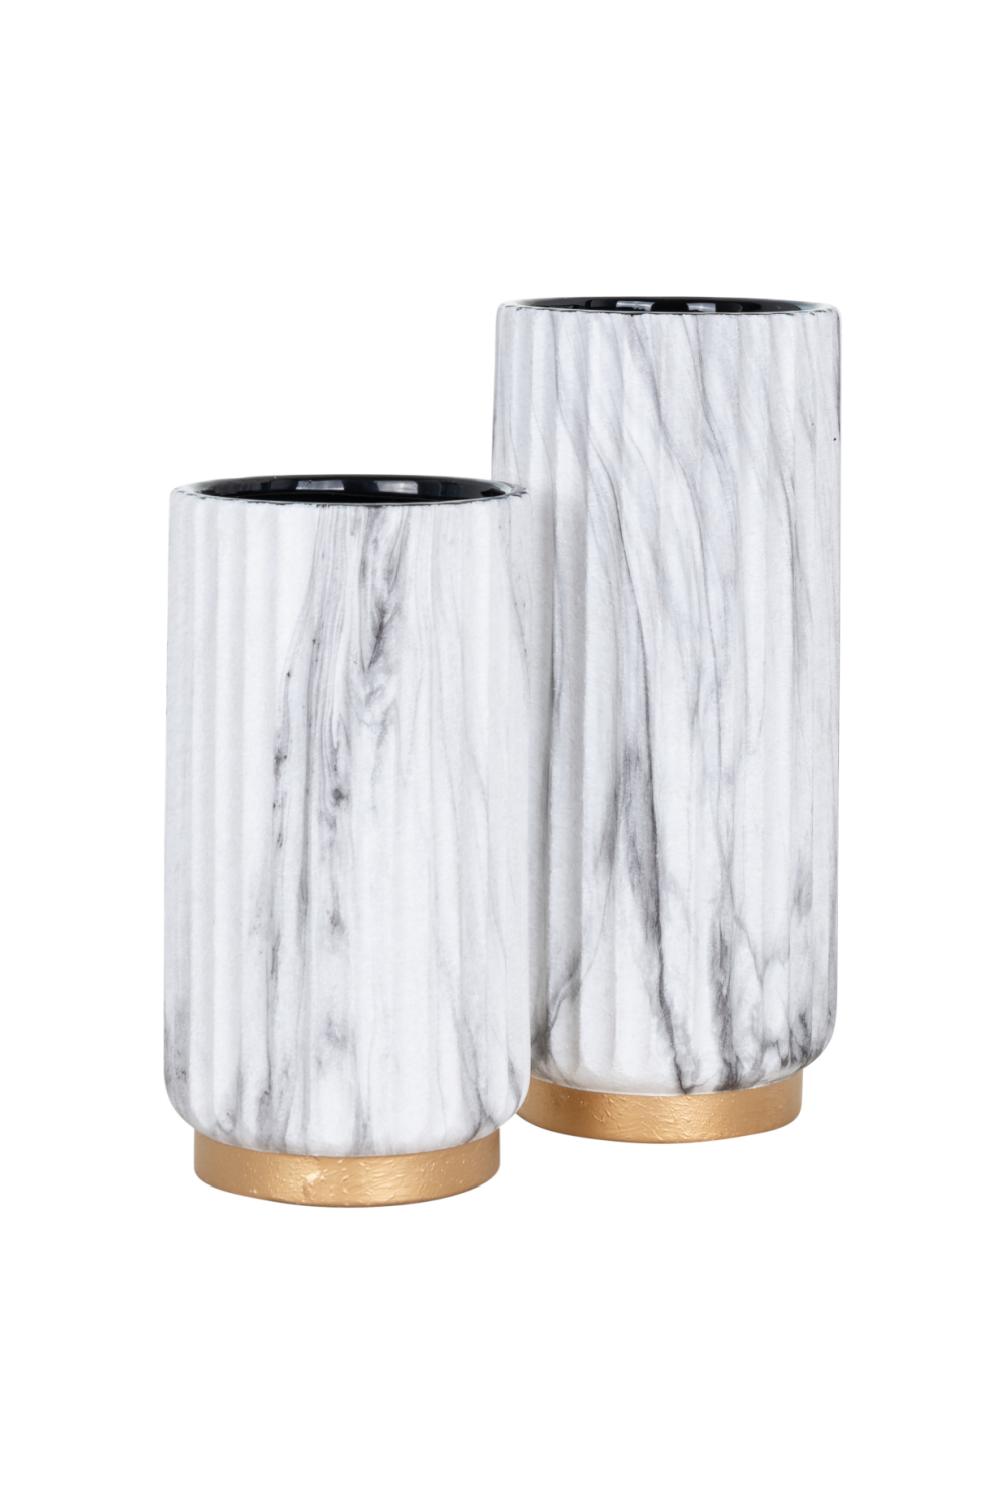 Corrugated White Ceramic Vase L | OROA Kenji | OROA.com